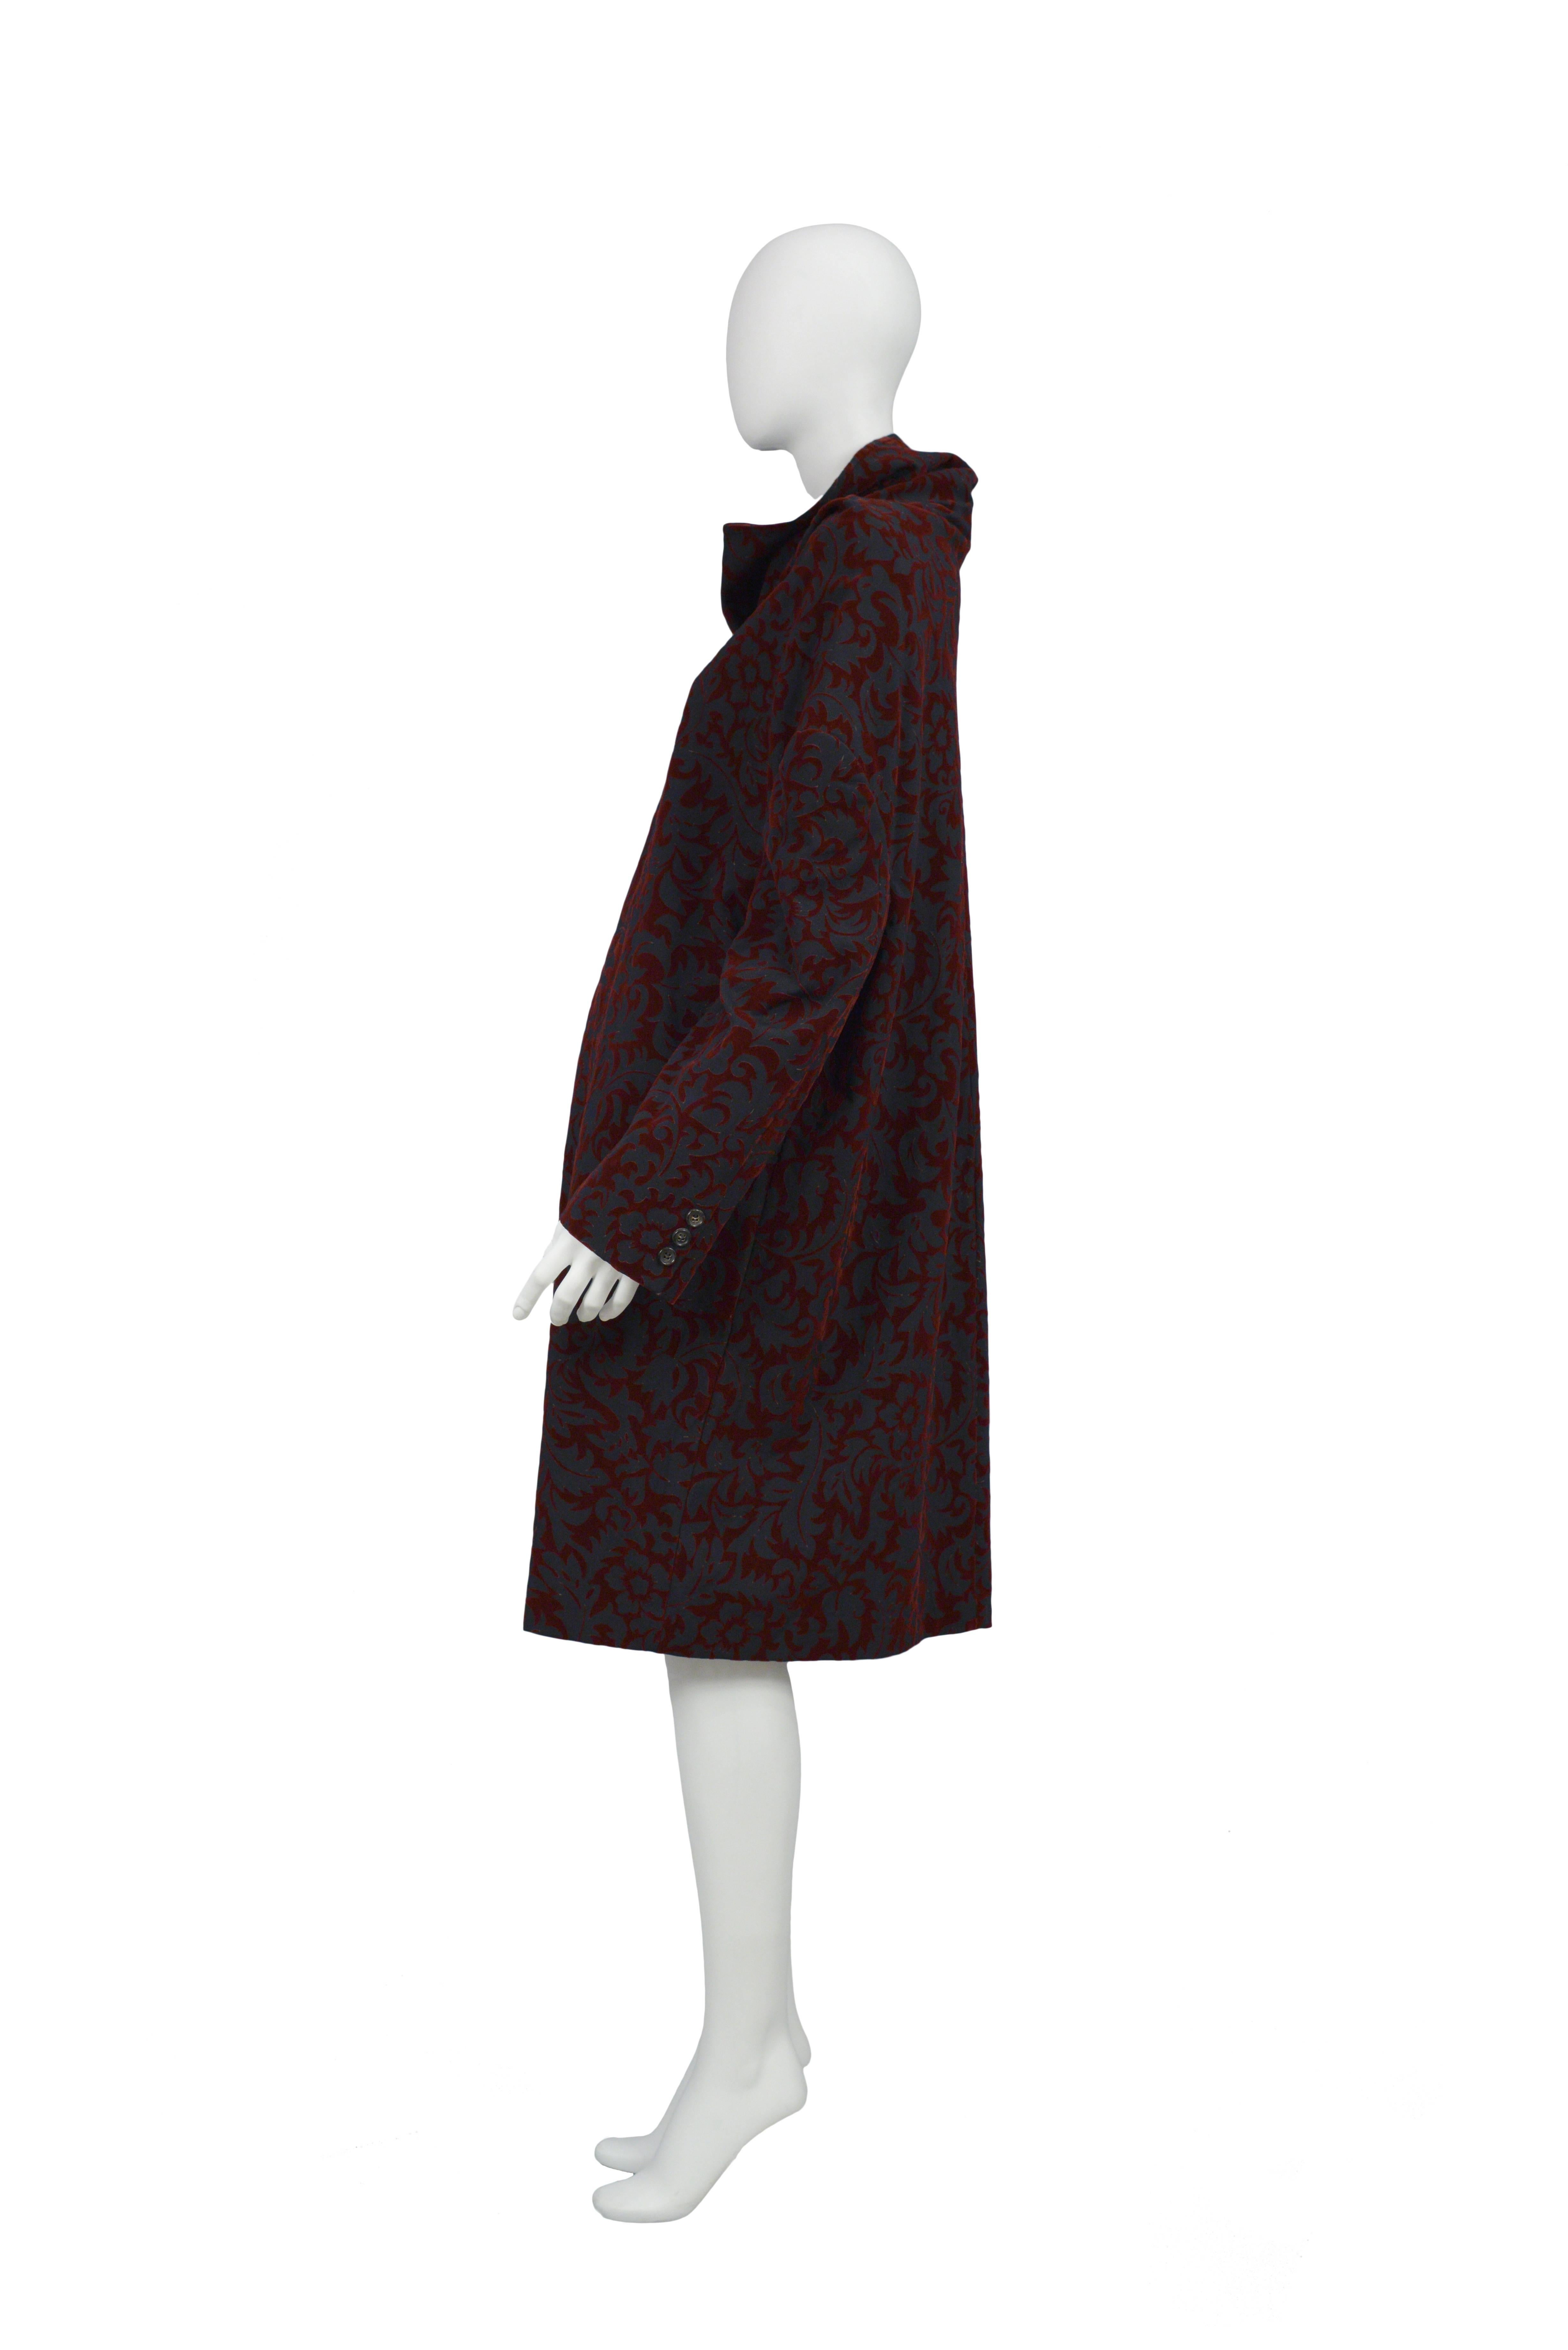 Comme Des Garcons Burgundy Devore Smock Dress 1996 In Excellent Condition For Sale In Los Angeles, CA